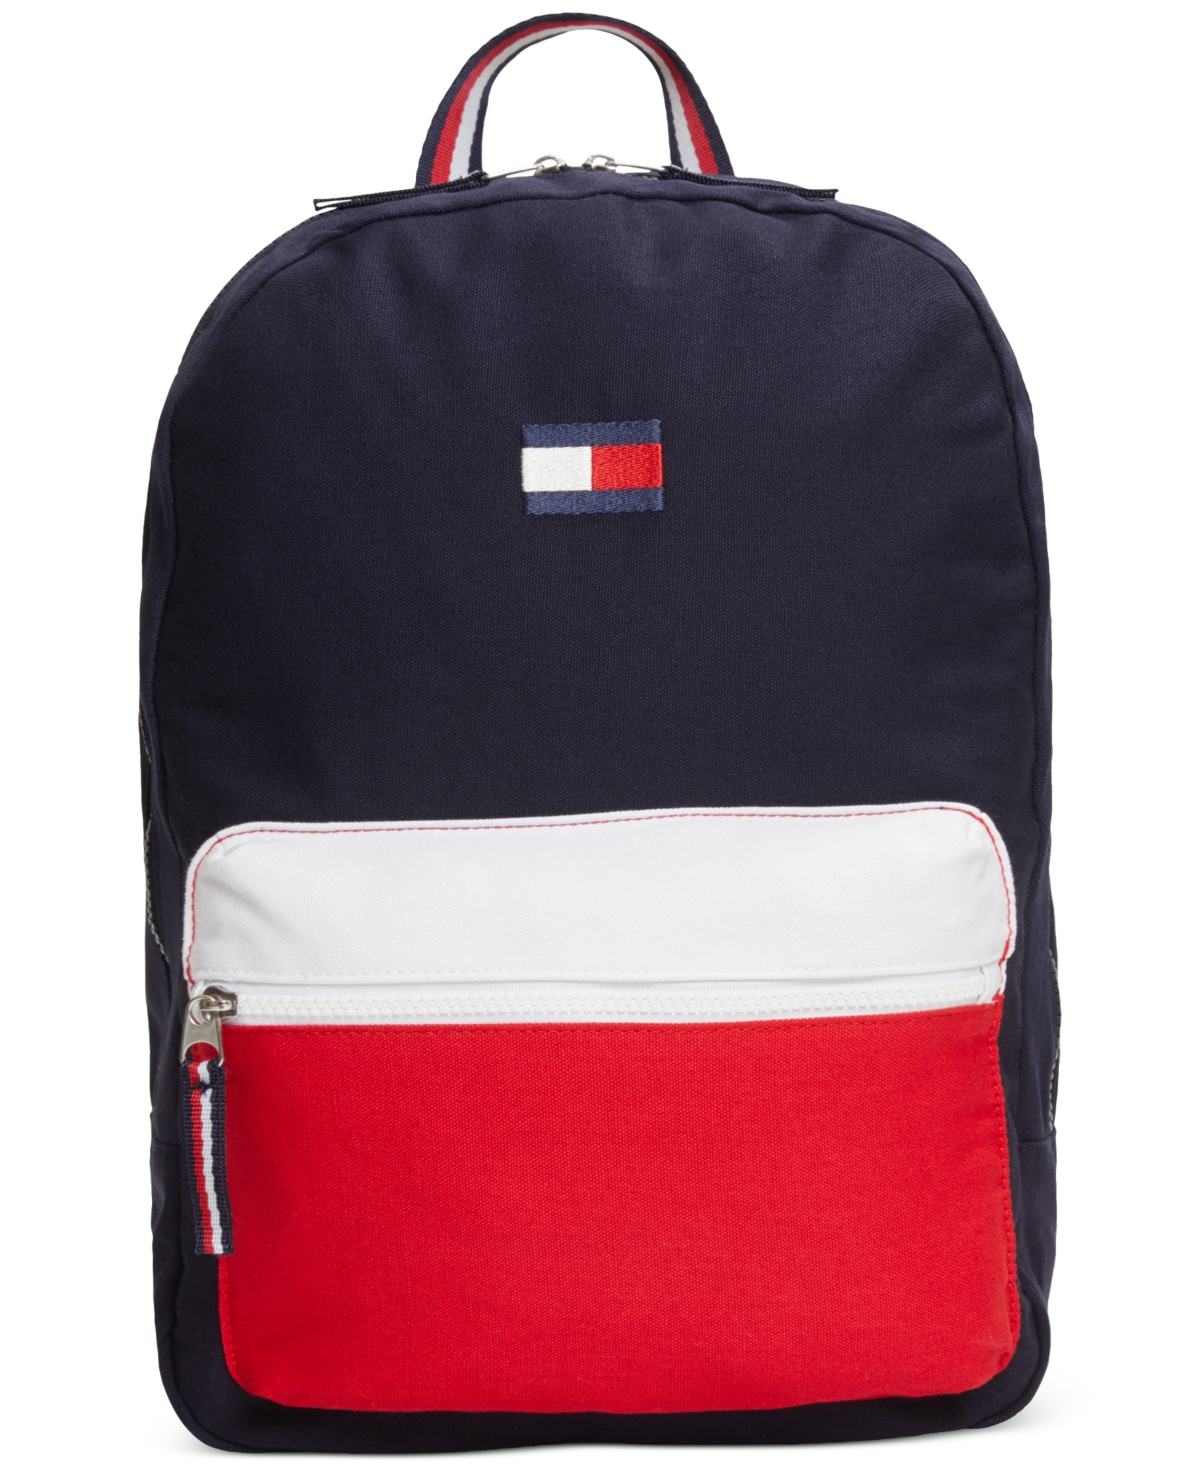 Men's Joe Colorblocked Backpack - Navy